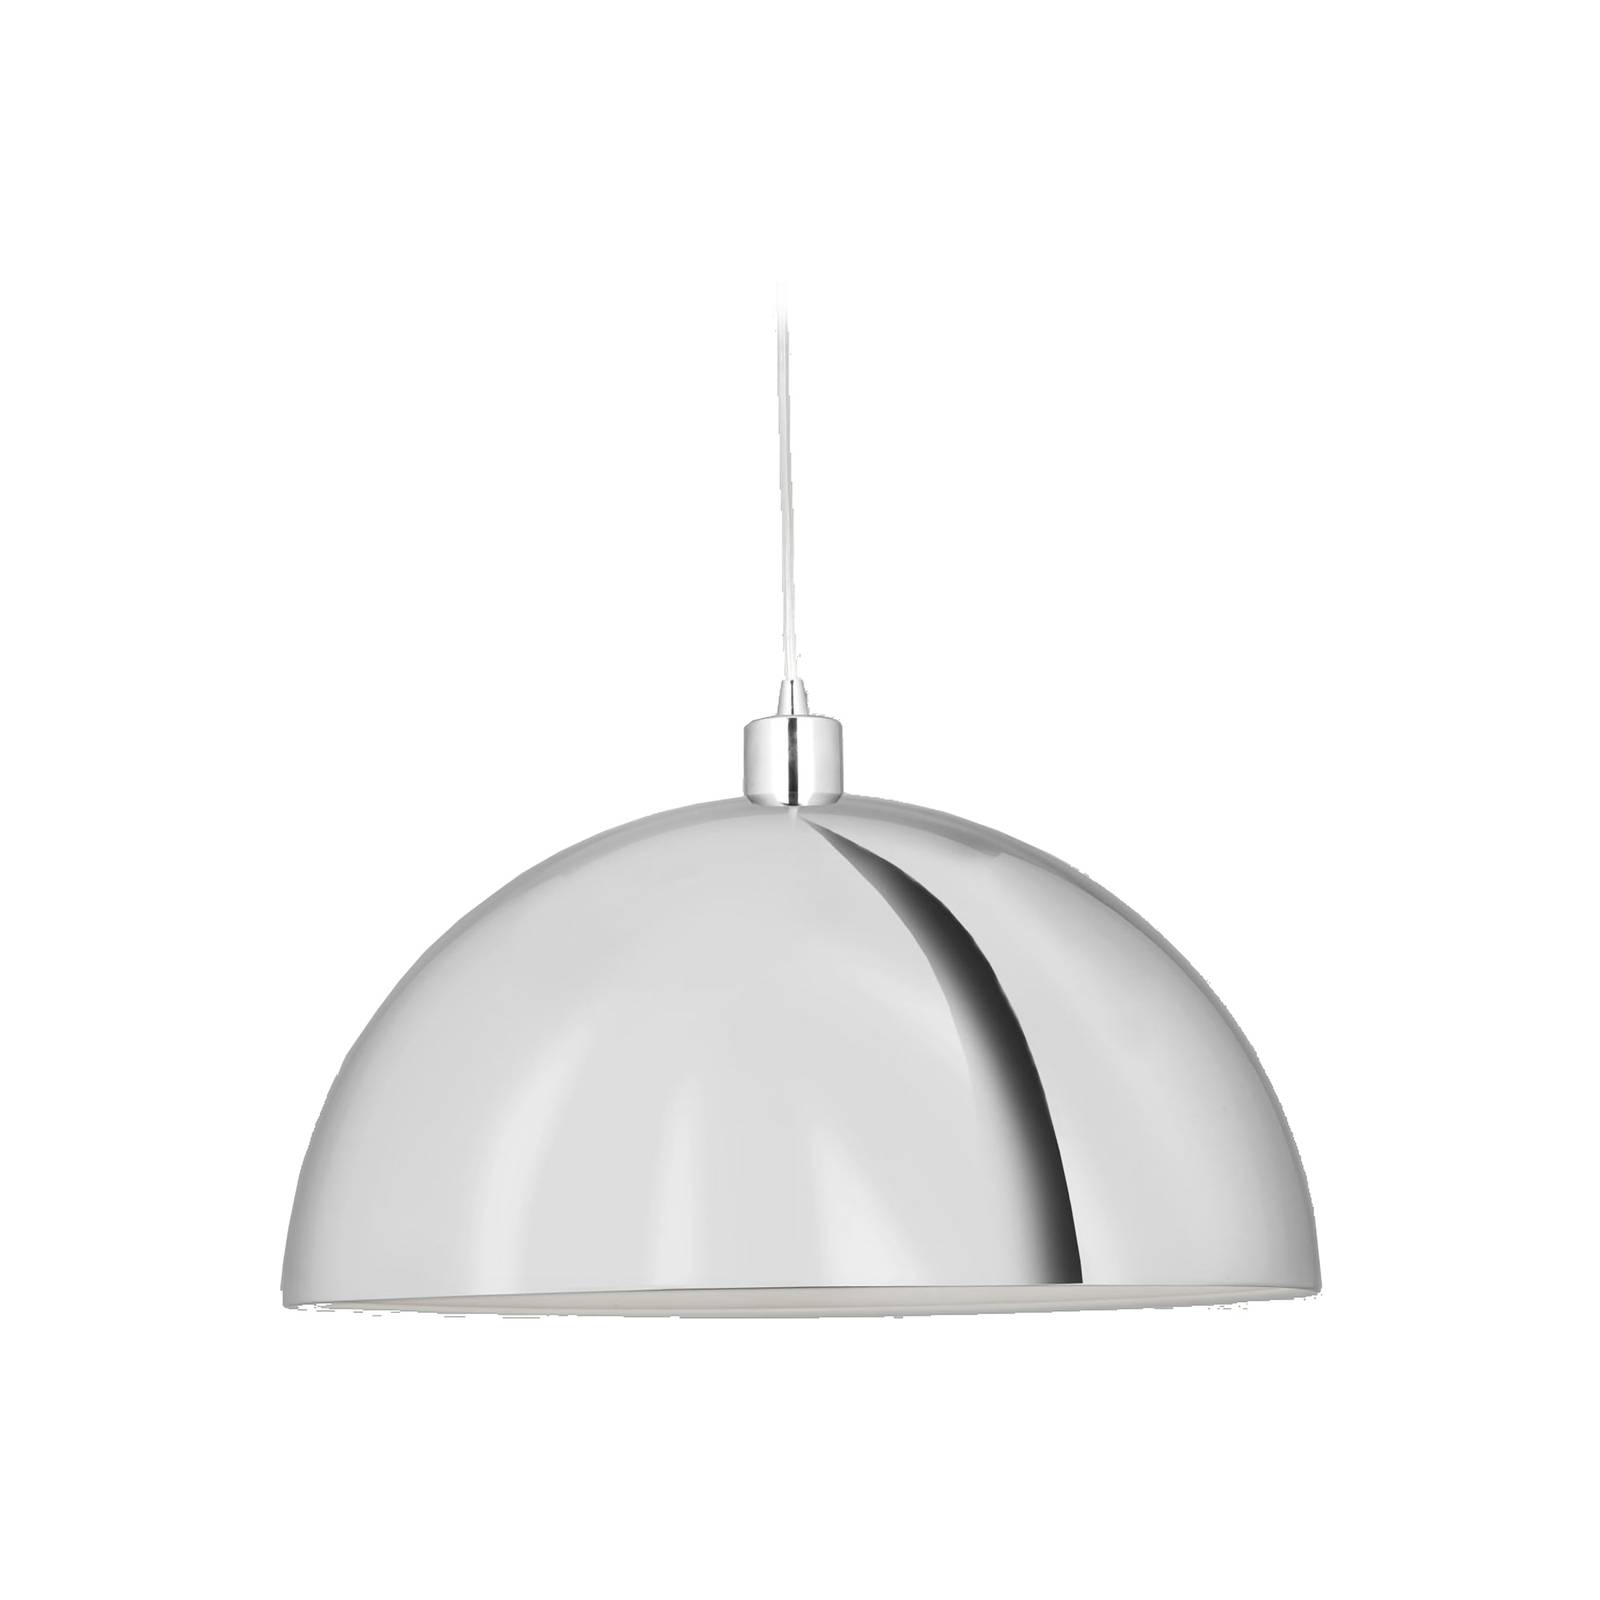 Image of Aluminor Dome lampada sospensione, Ø 50 cm, cromo